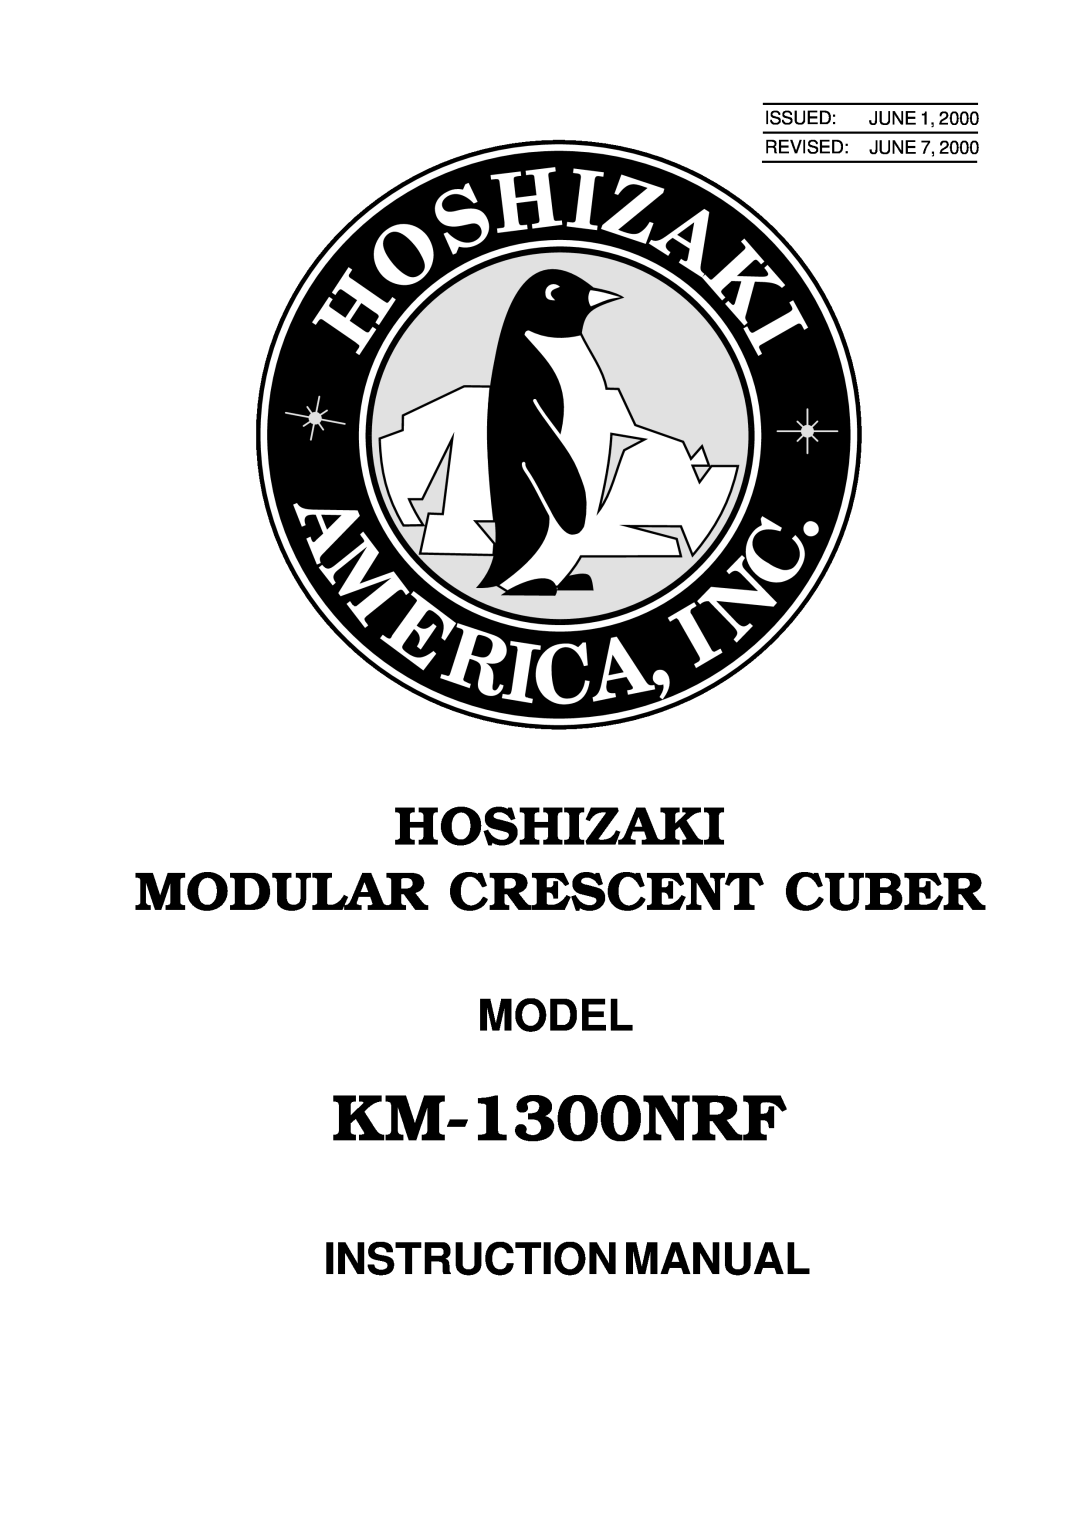 Hoshizaki KM-1300NRF instruction manual Hoshizaki Modular Crescent Cuber, Model, ISSUED JUNE 1, REVISED JUNE 